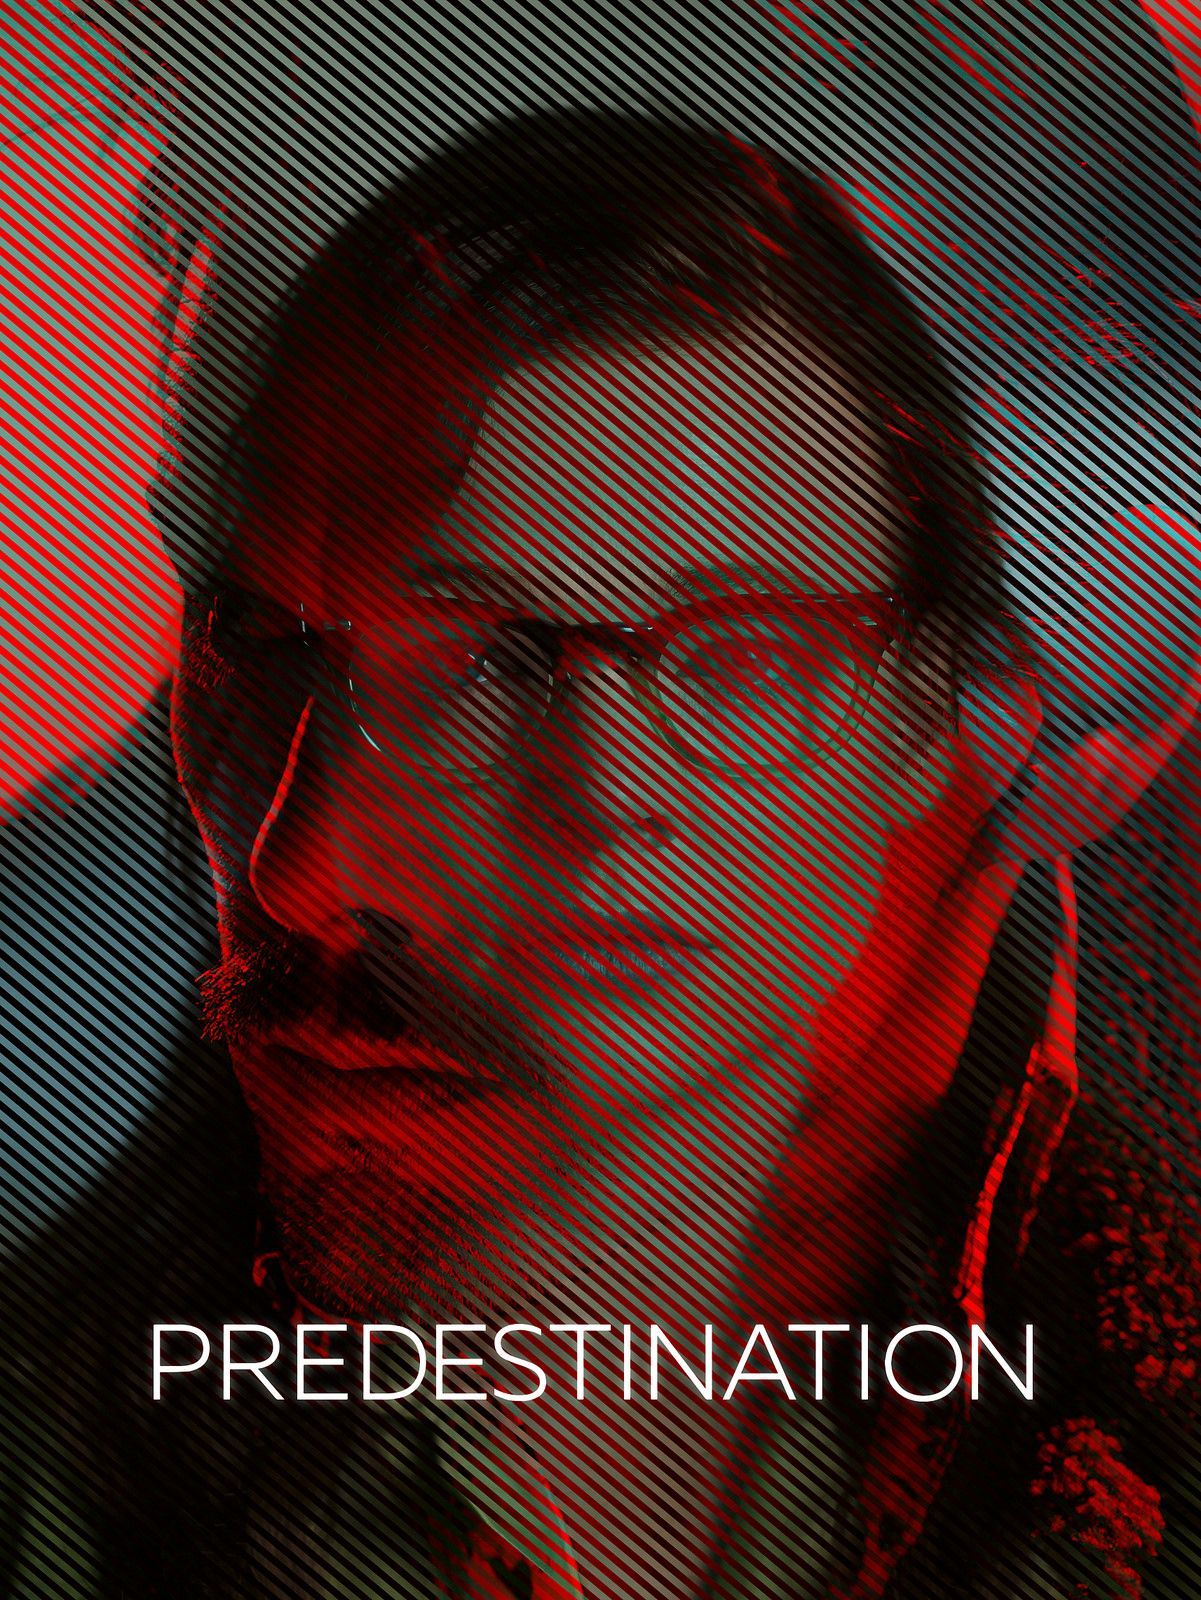 PREDESTINATION FILM. Best movie posters, Film posters, Film movie